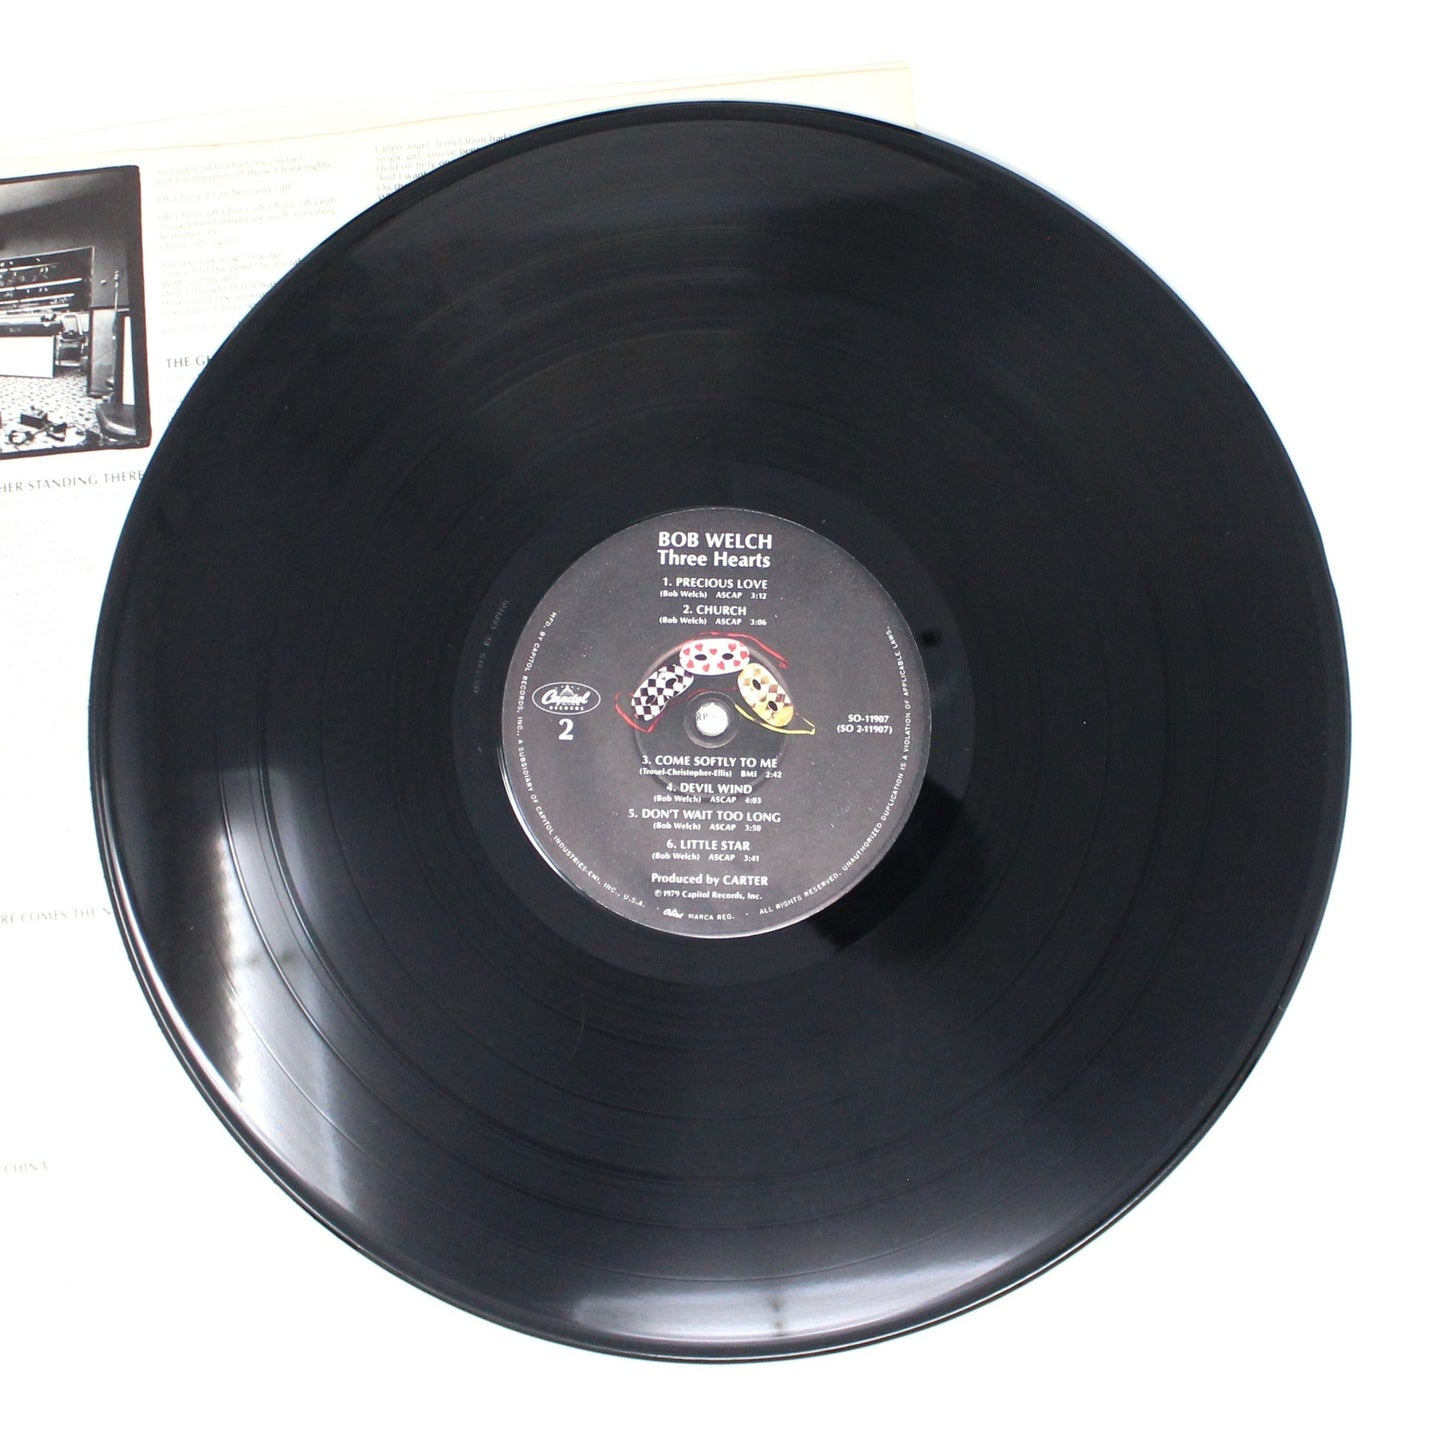 Record Album, Bob Welch, Three Hearts, Original 1979, Capitol Records, Vintage VG+